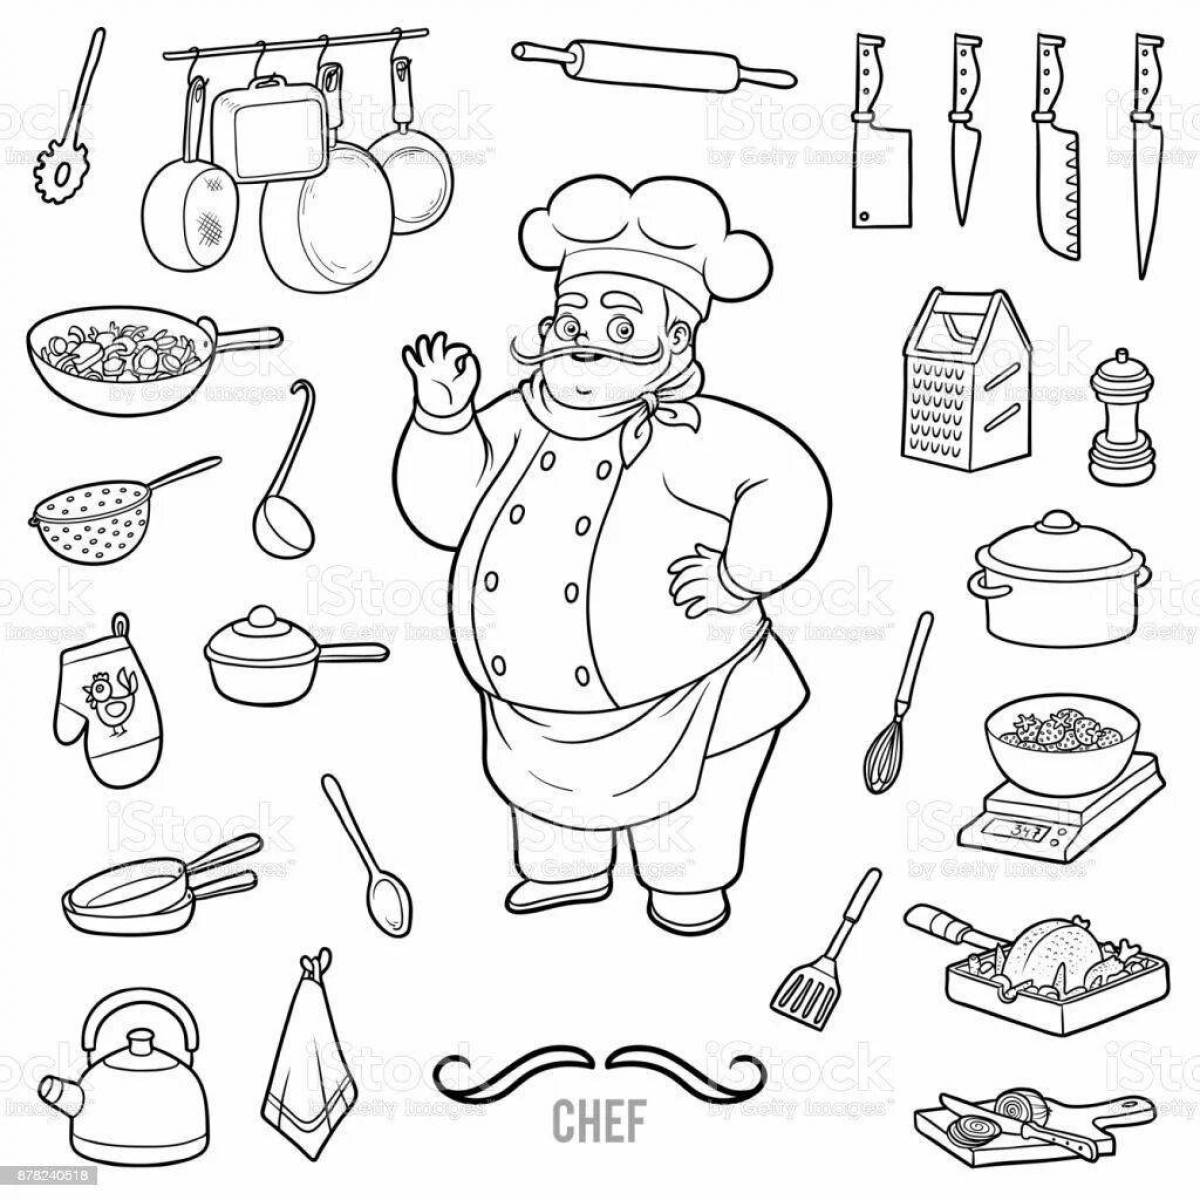 Incredible cook tools coloring book